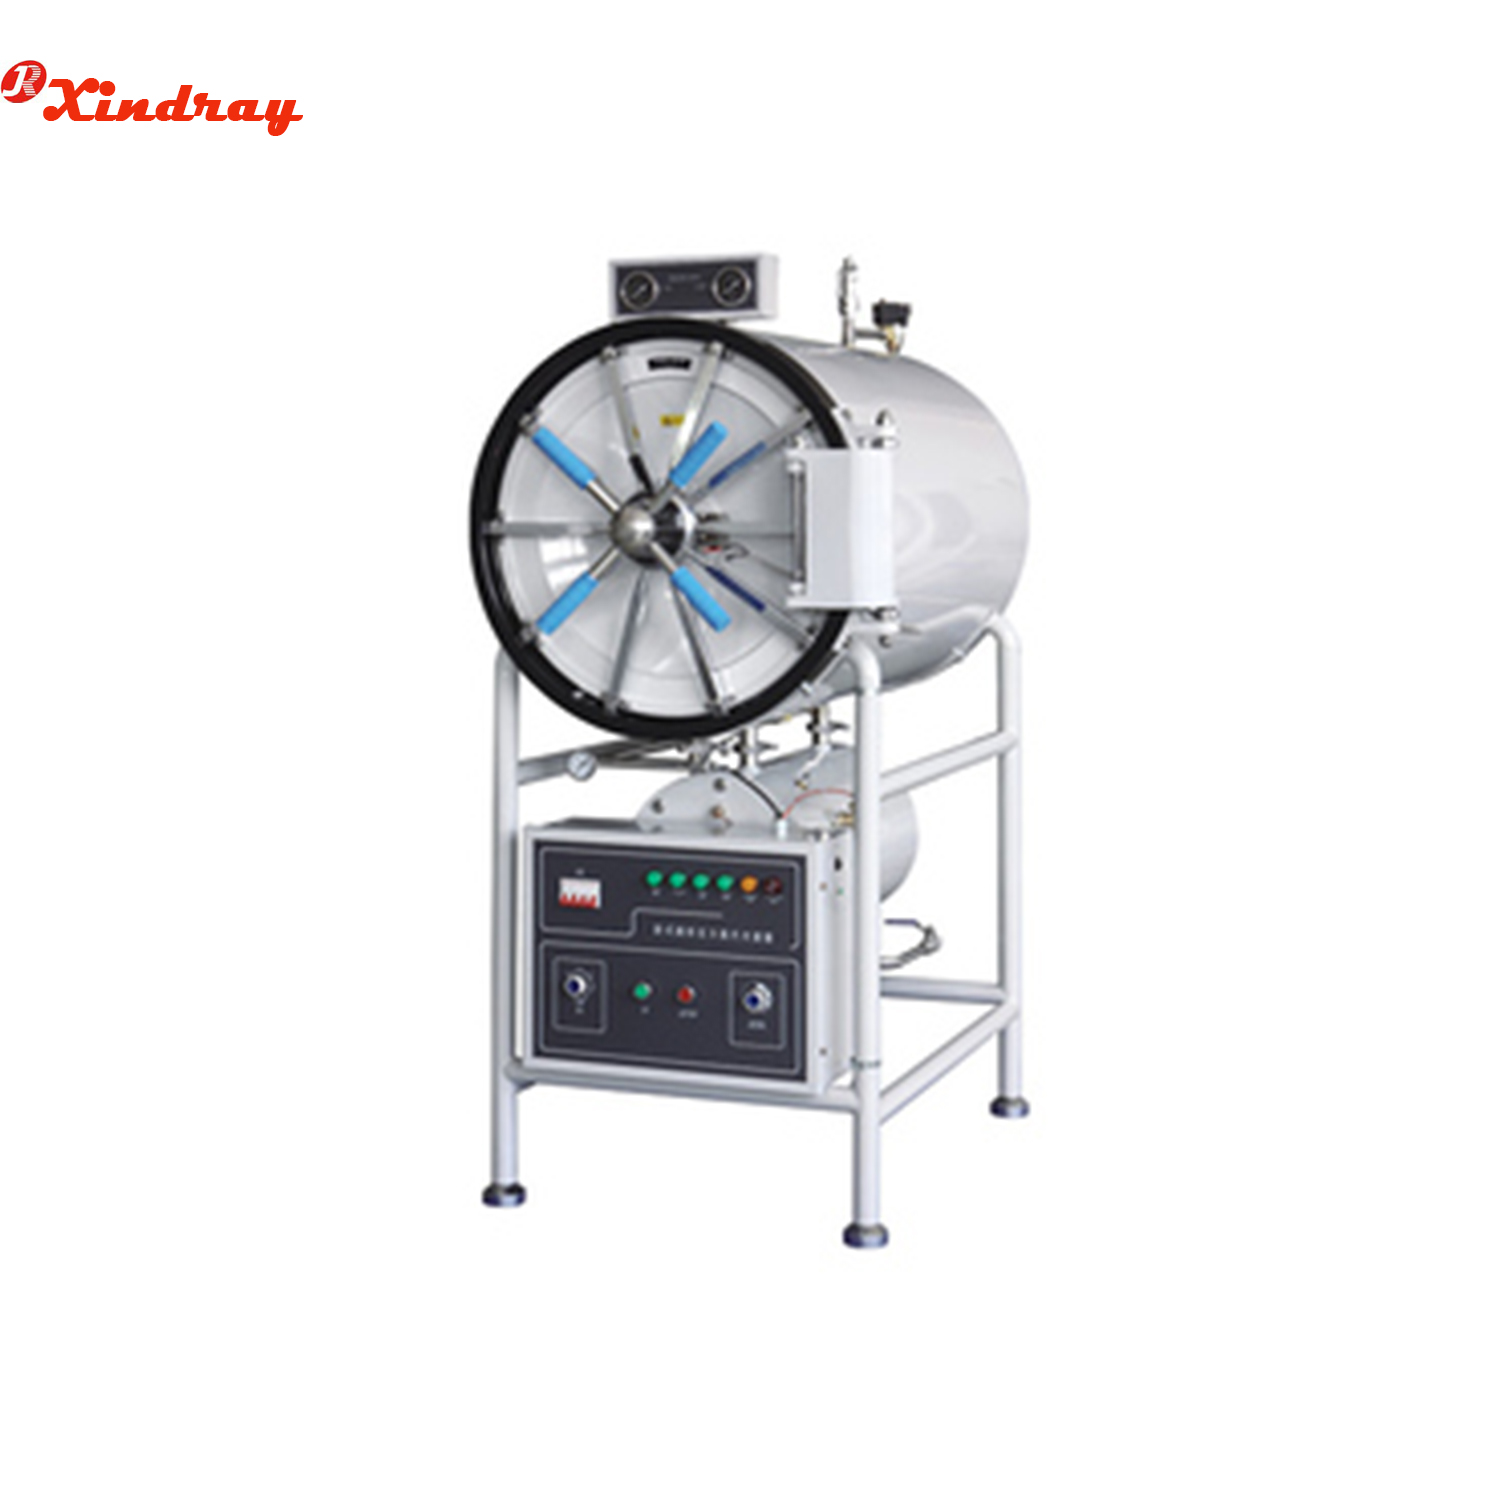 Portably Horizontal cylindrical pressure steam sterilizer